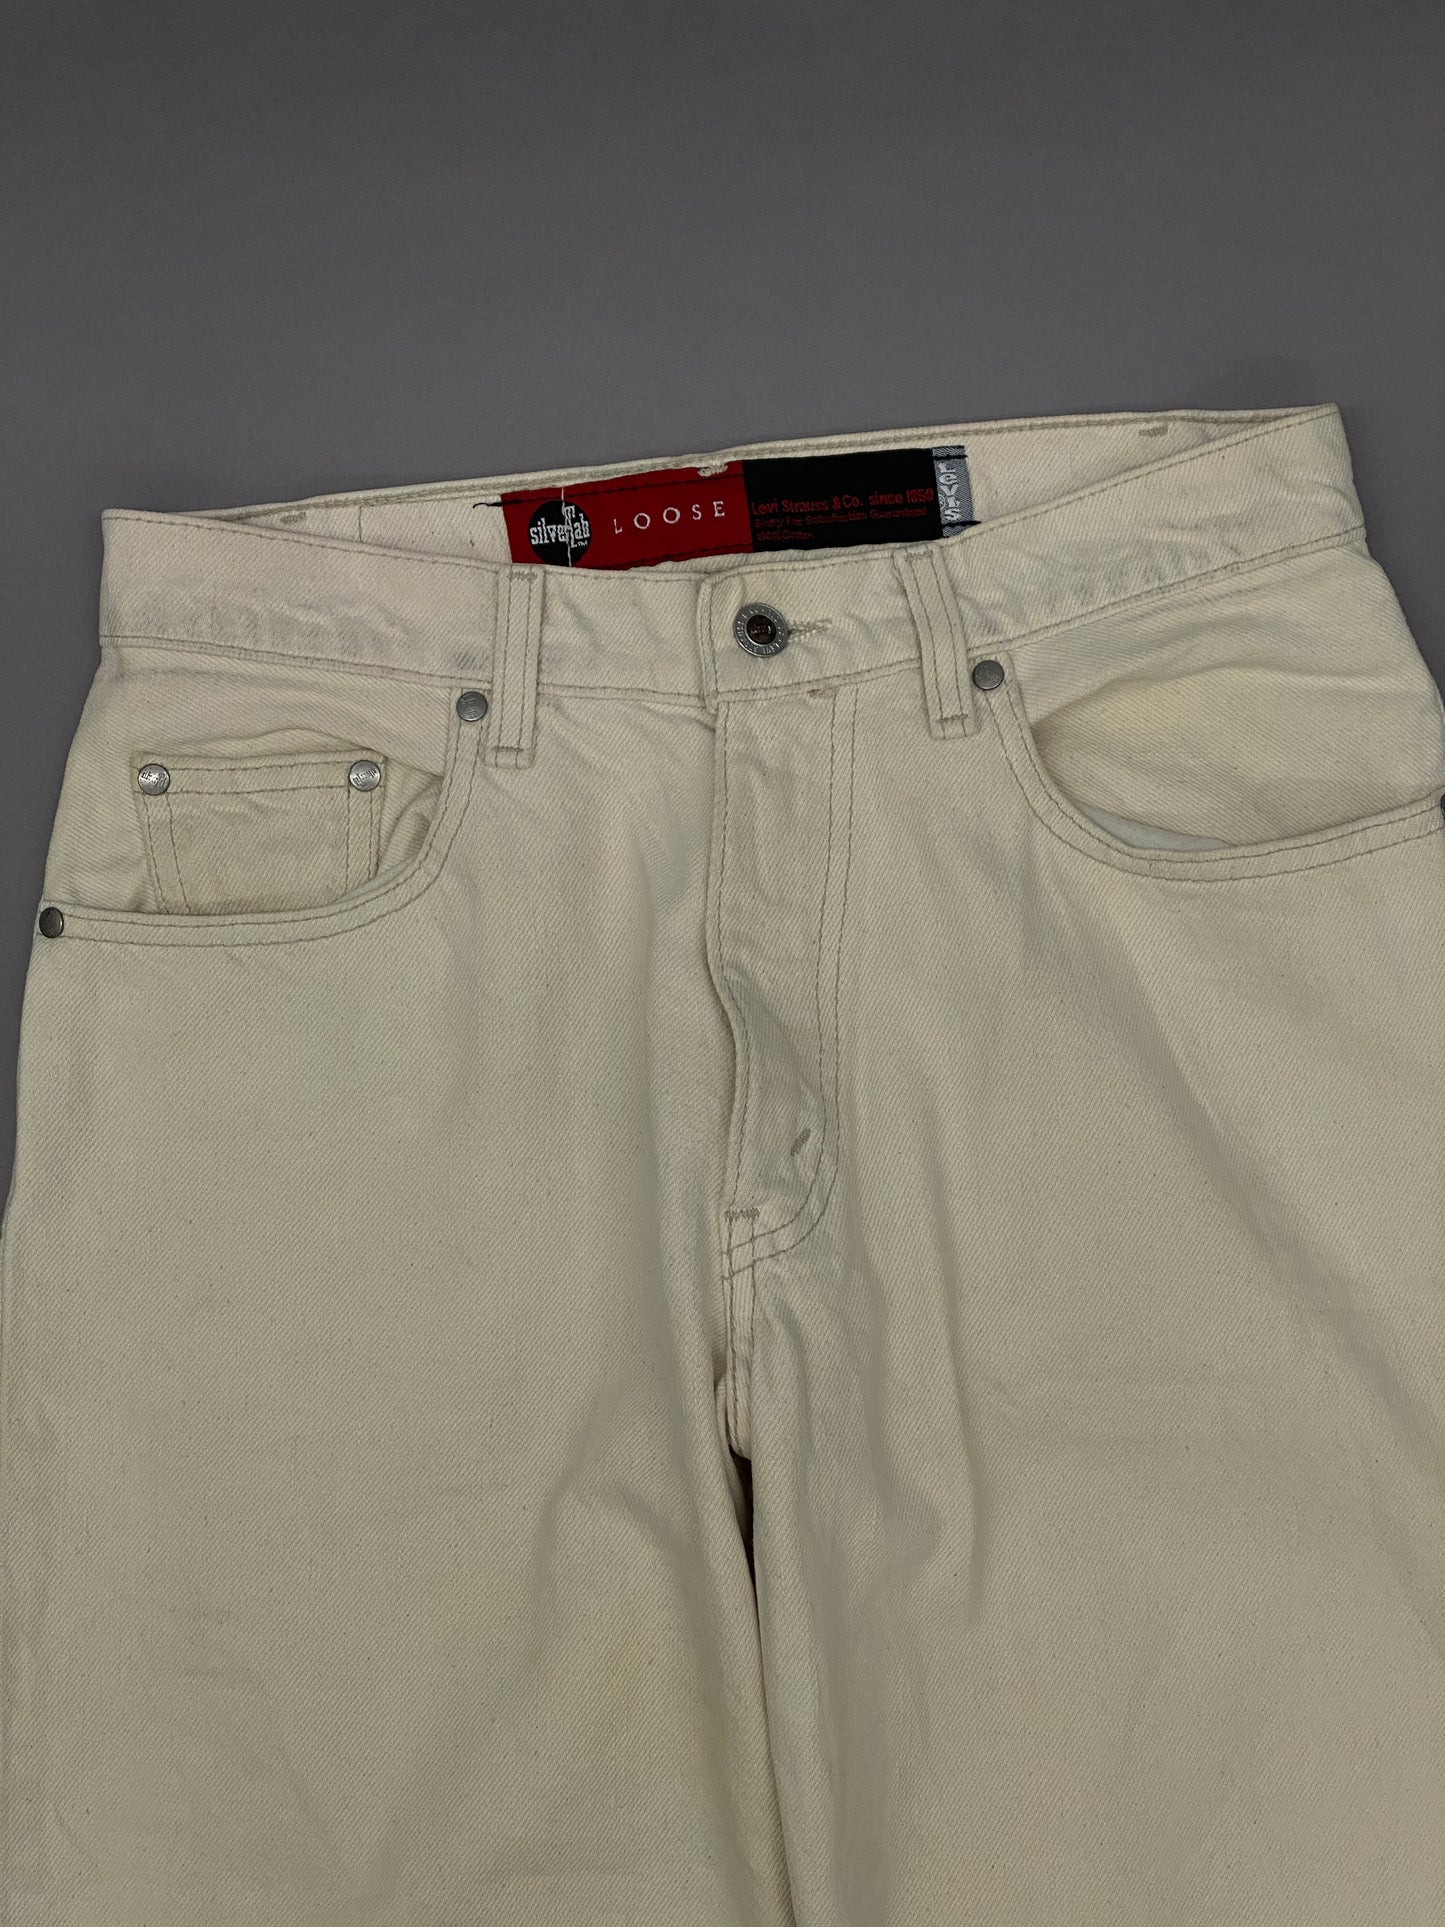 Levis Silvertab Vintage White Jeans - 29 x 32